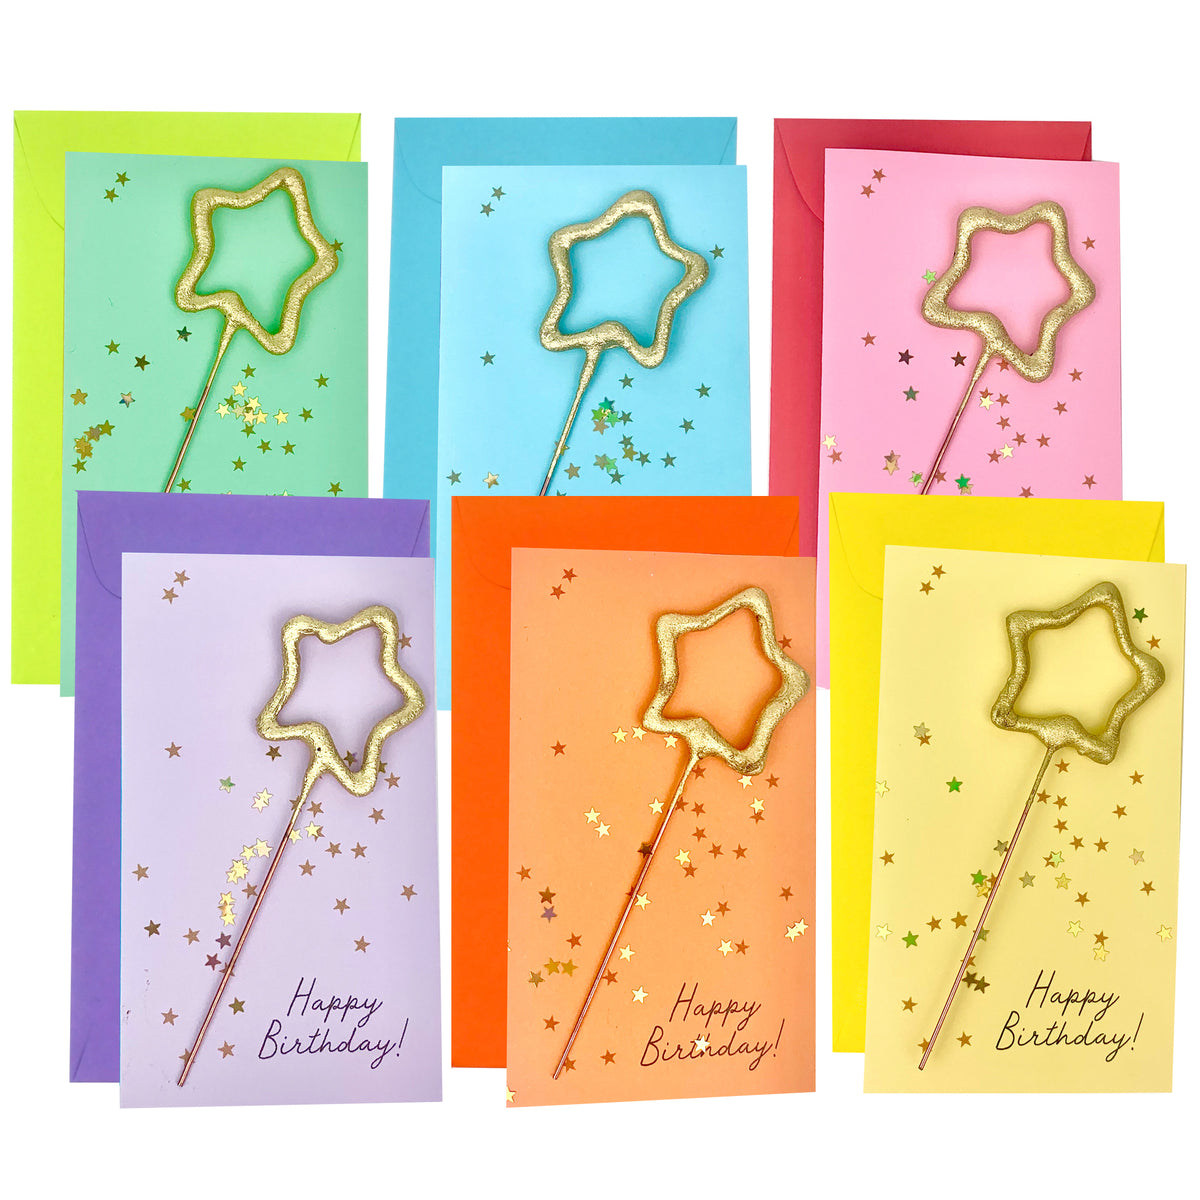 Confetti Sparkler Cards Happy Birthday!